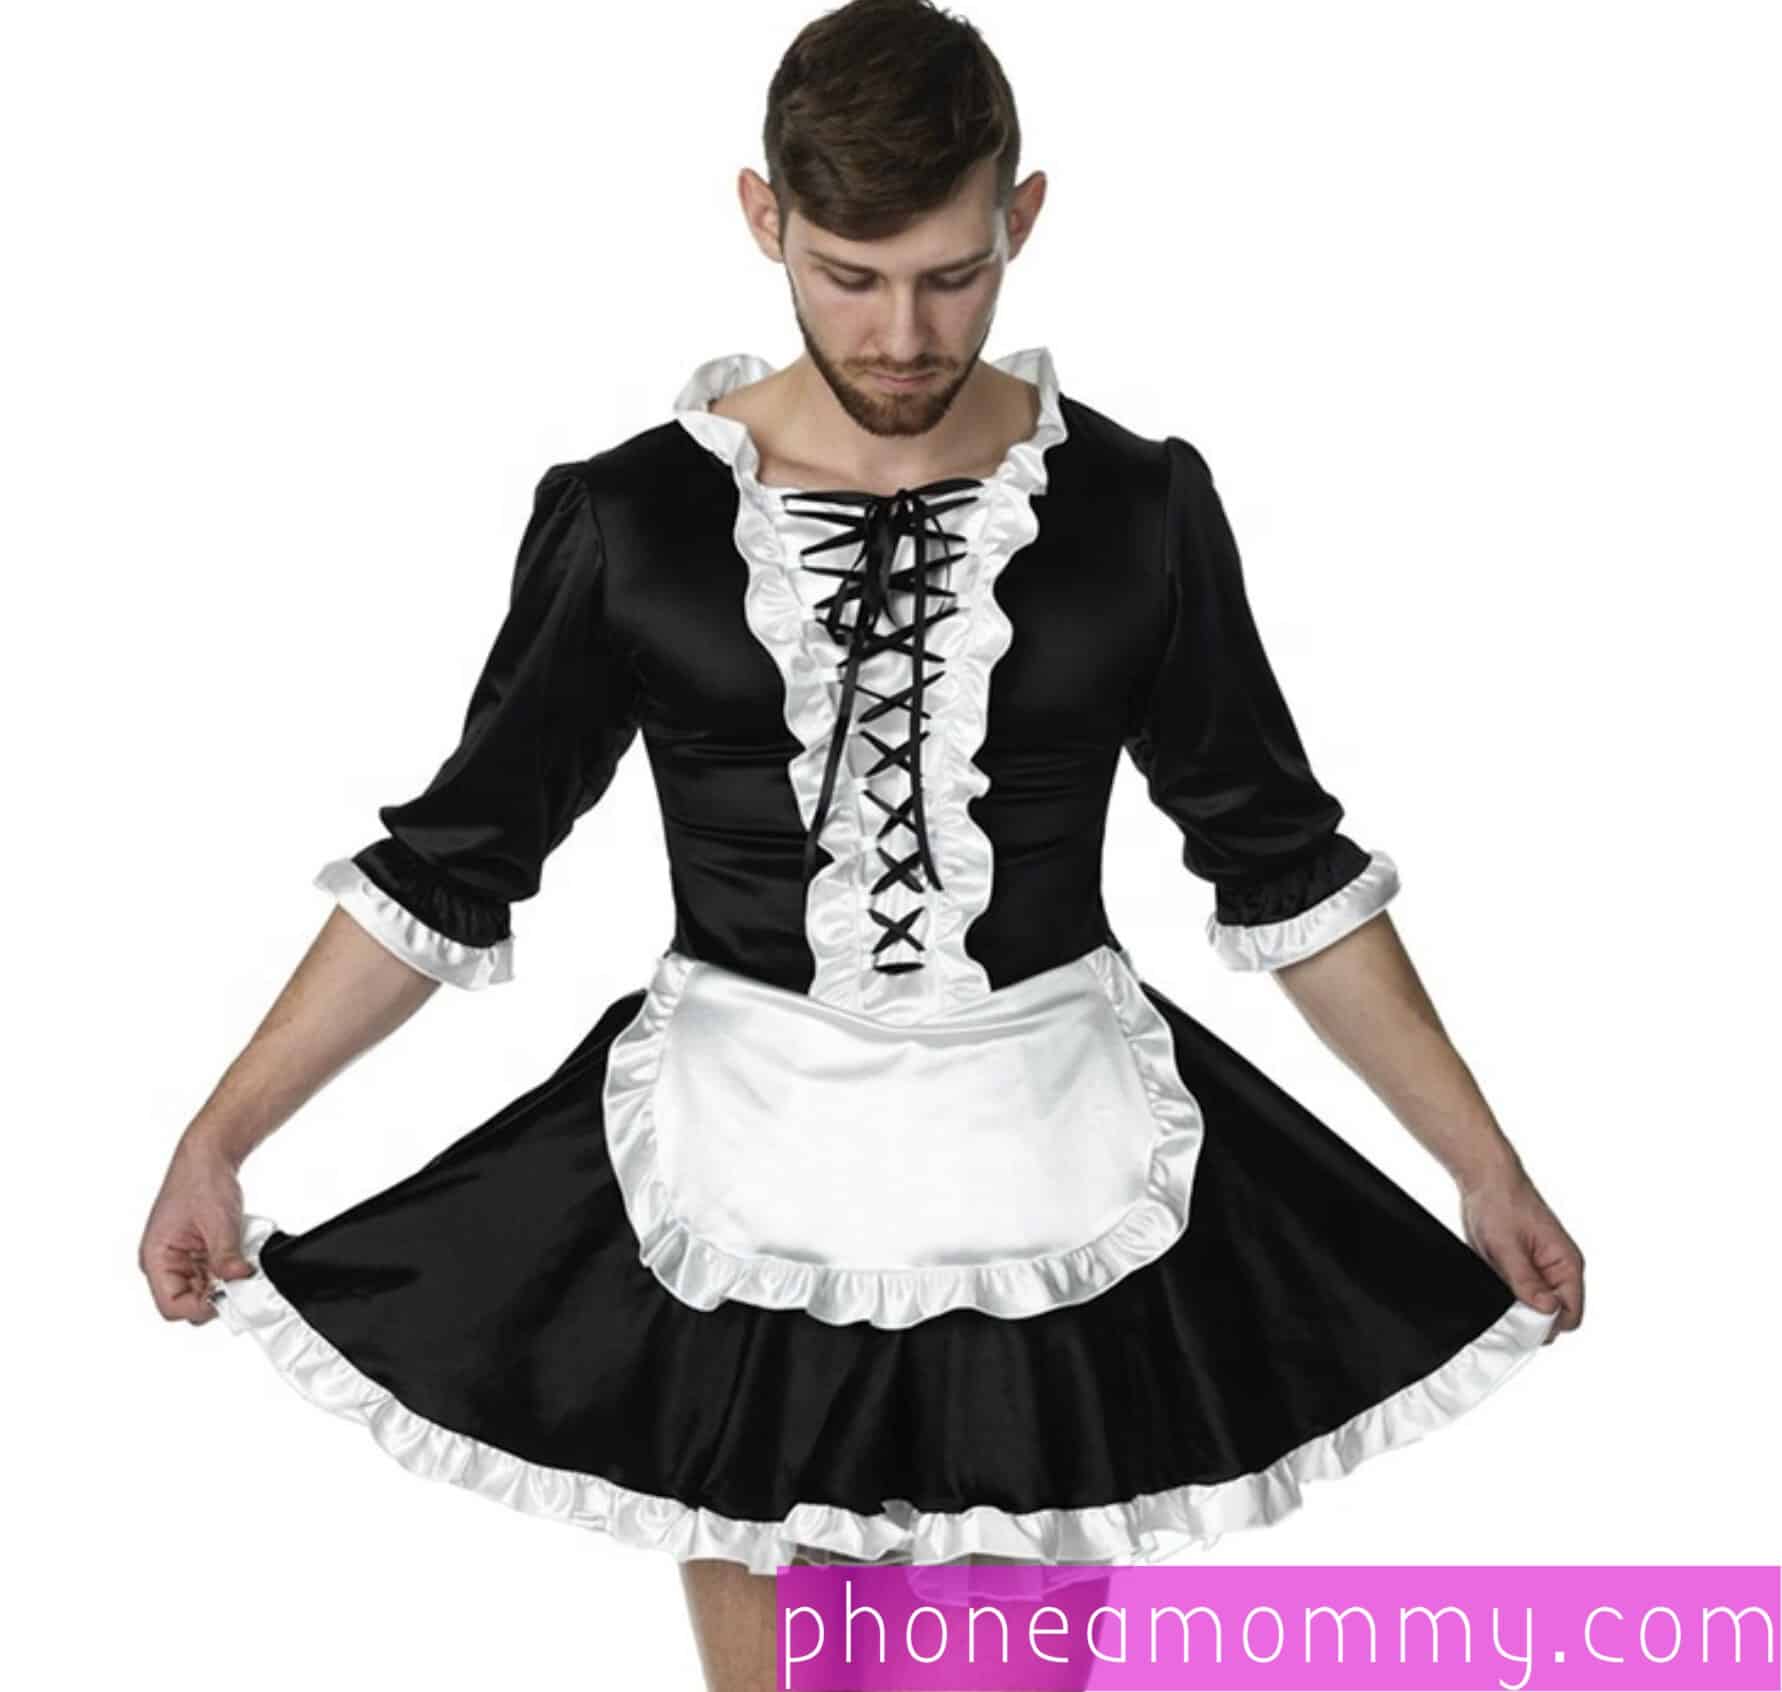 Sexy men wearing the Gothic Lolita Dress